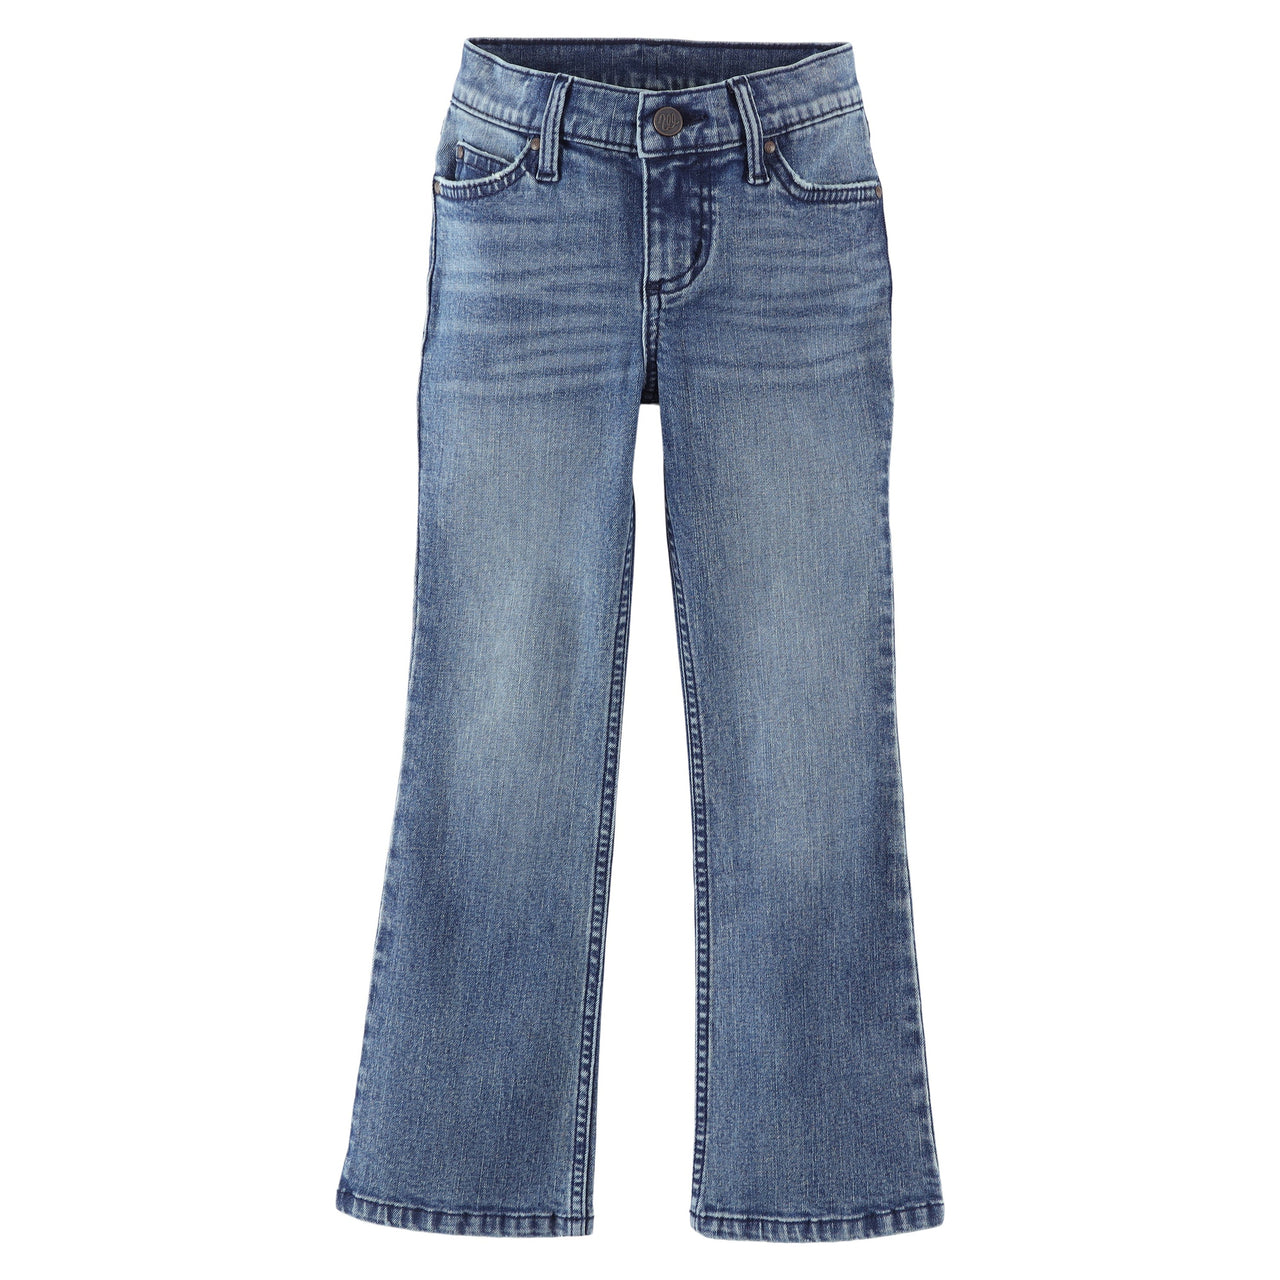 Wrangler Girl's Retro Bootcut Jeans - Nealy